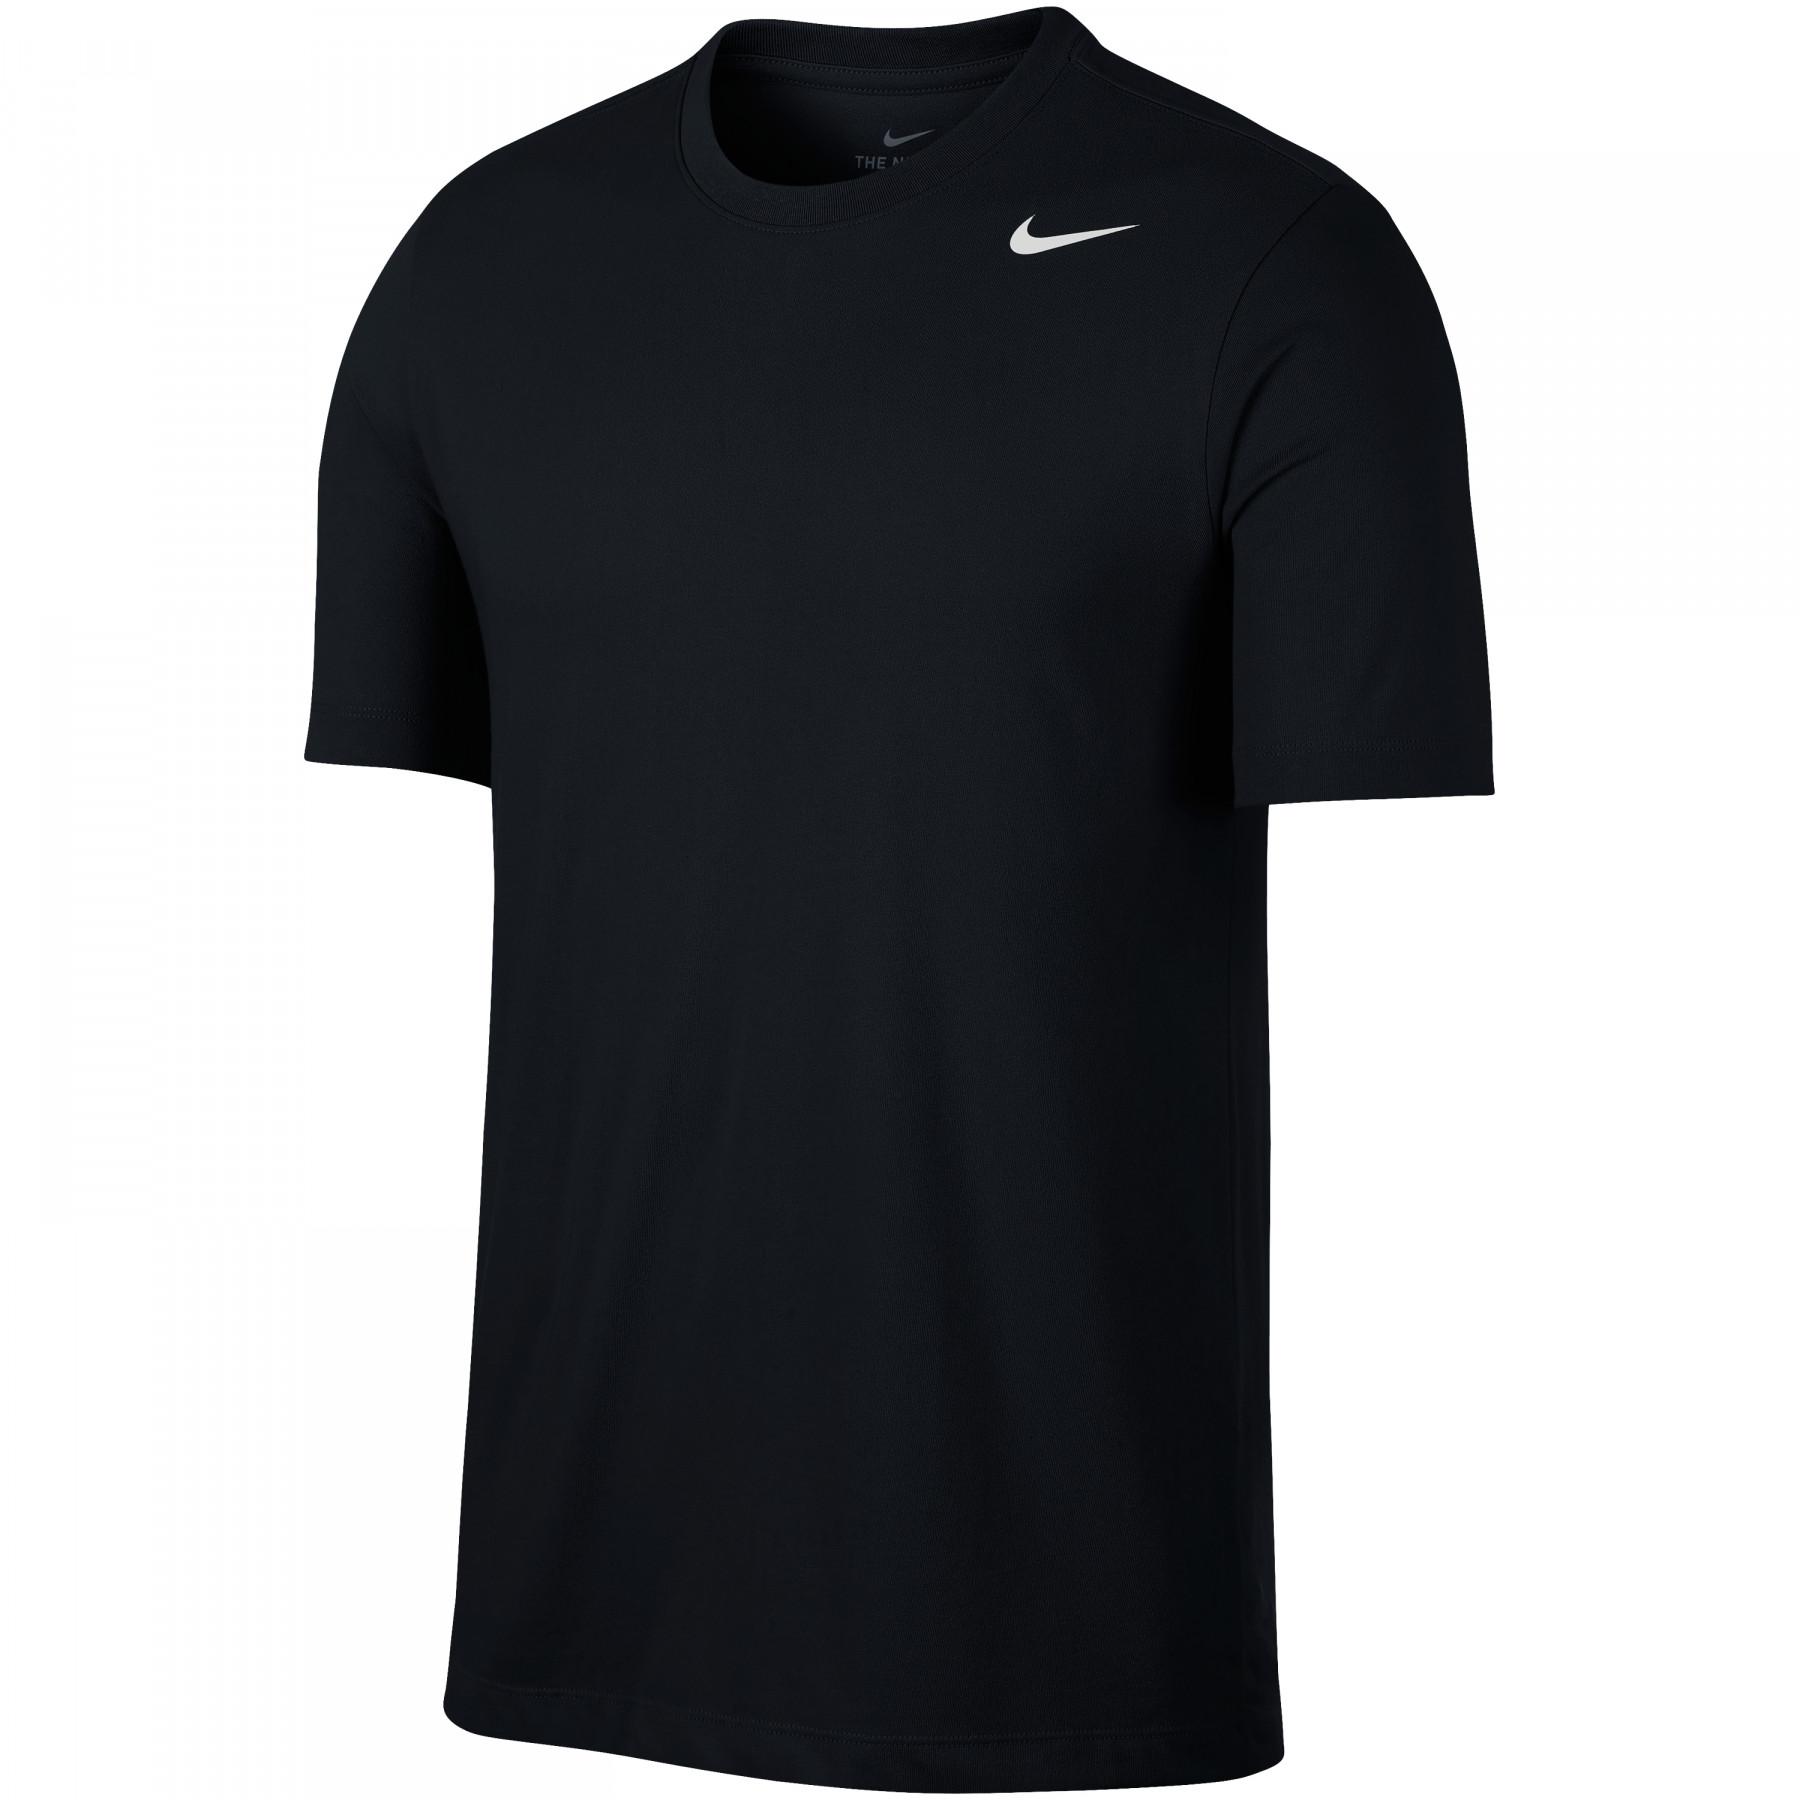 T-shirt Nike Dri-FIT - T-shirts & polo shirts - Men's wear - Handball wear